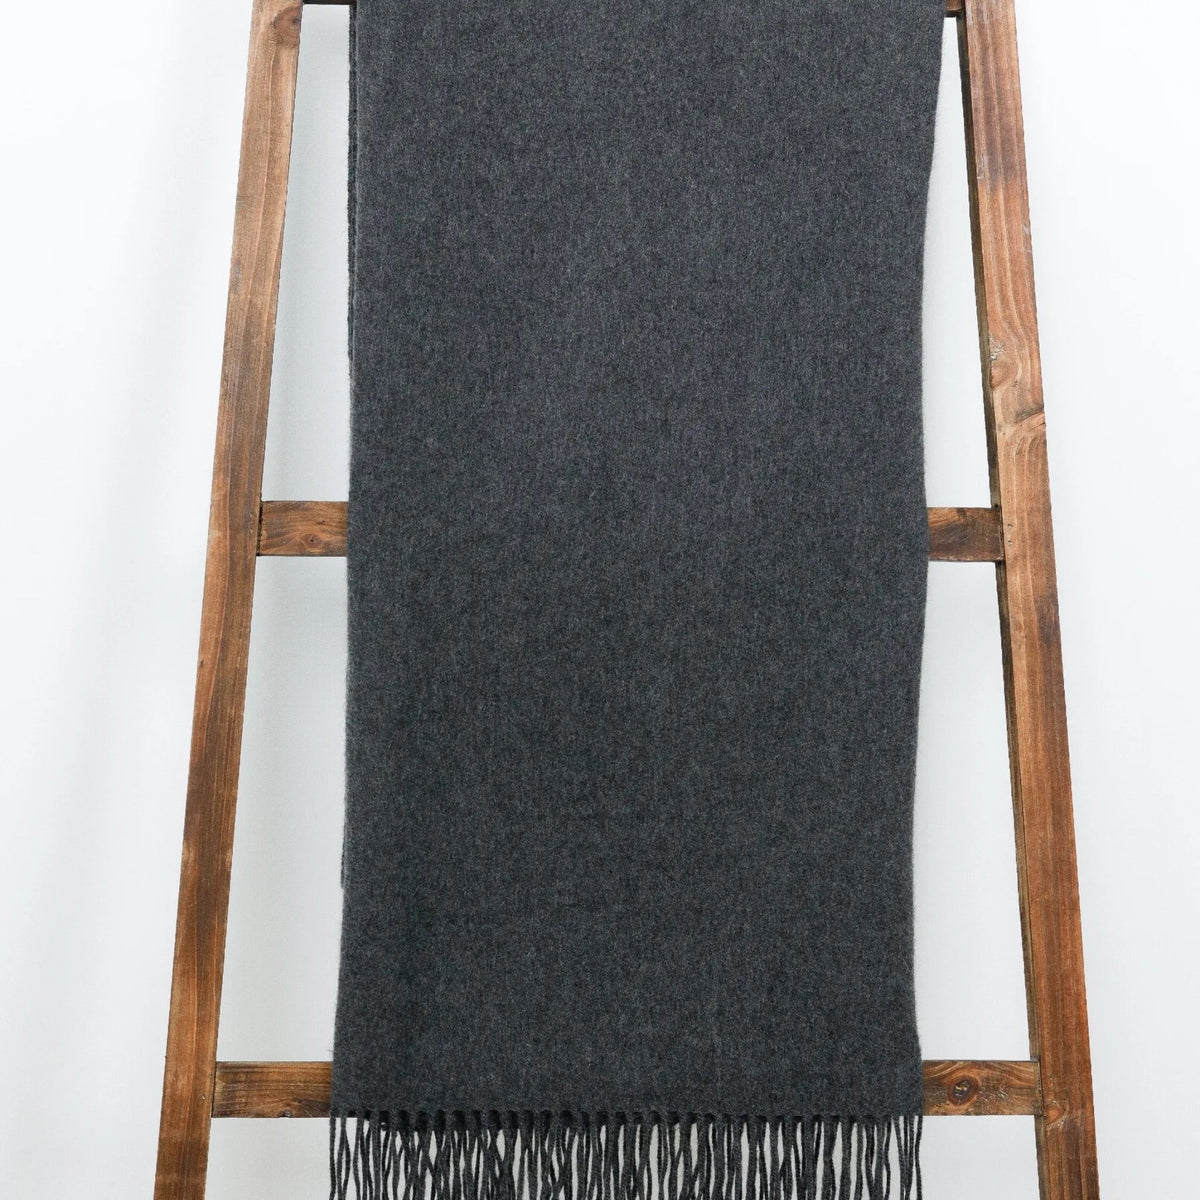 Alashan 100% Cashmere Plain Weave Essential Throw Charcoal Color